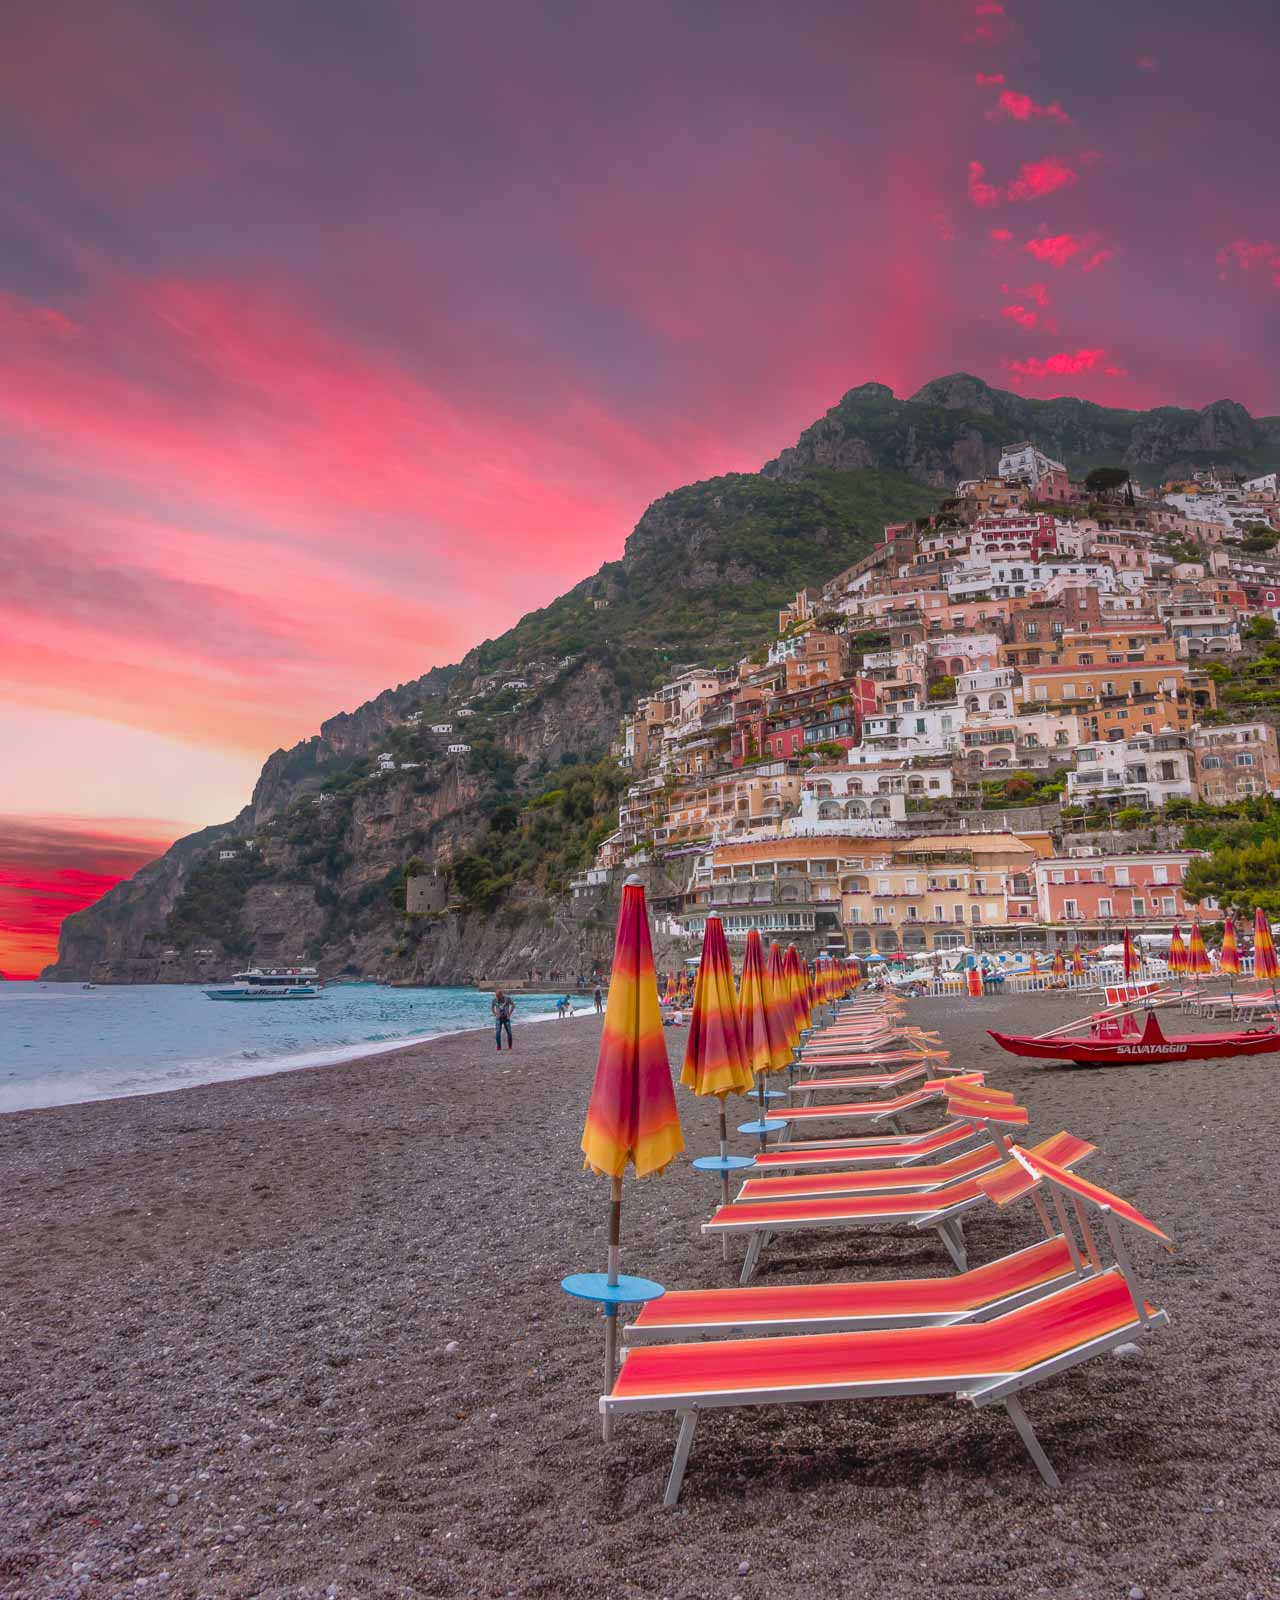 Tips for visiting the Amalfi Coast